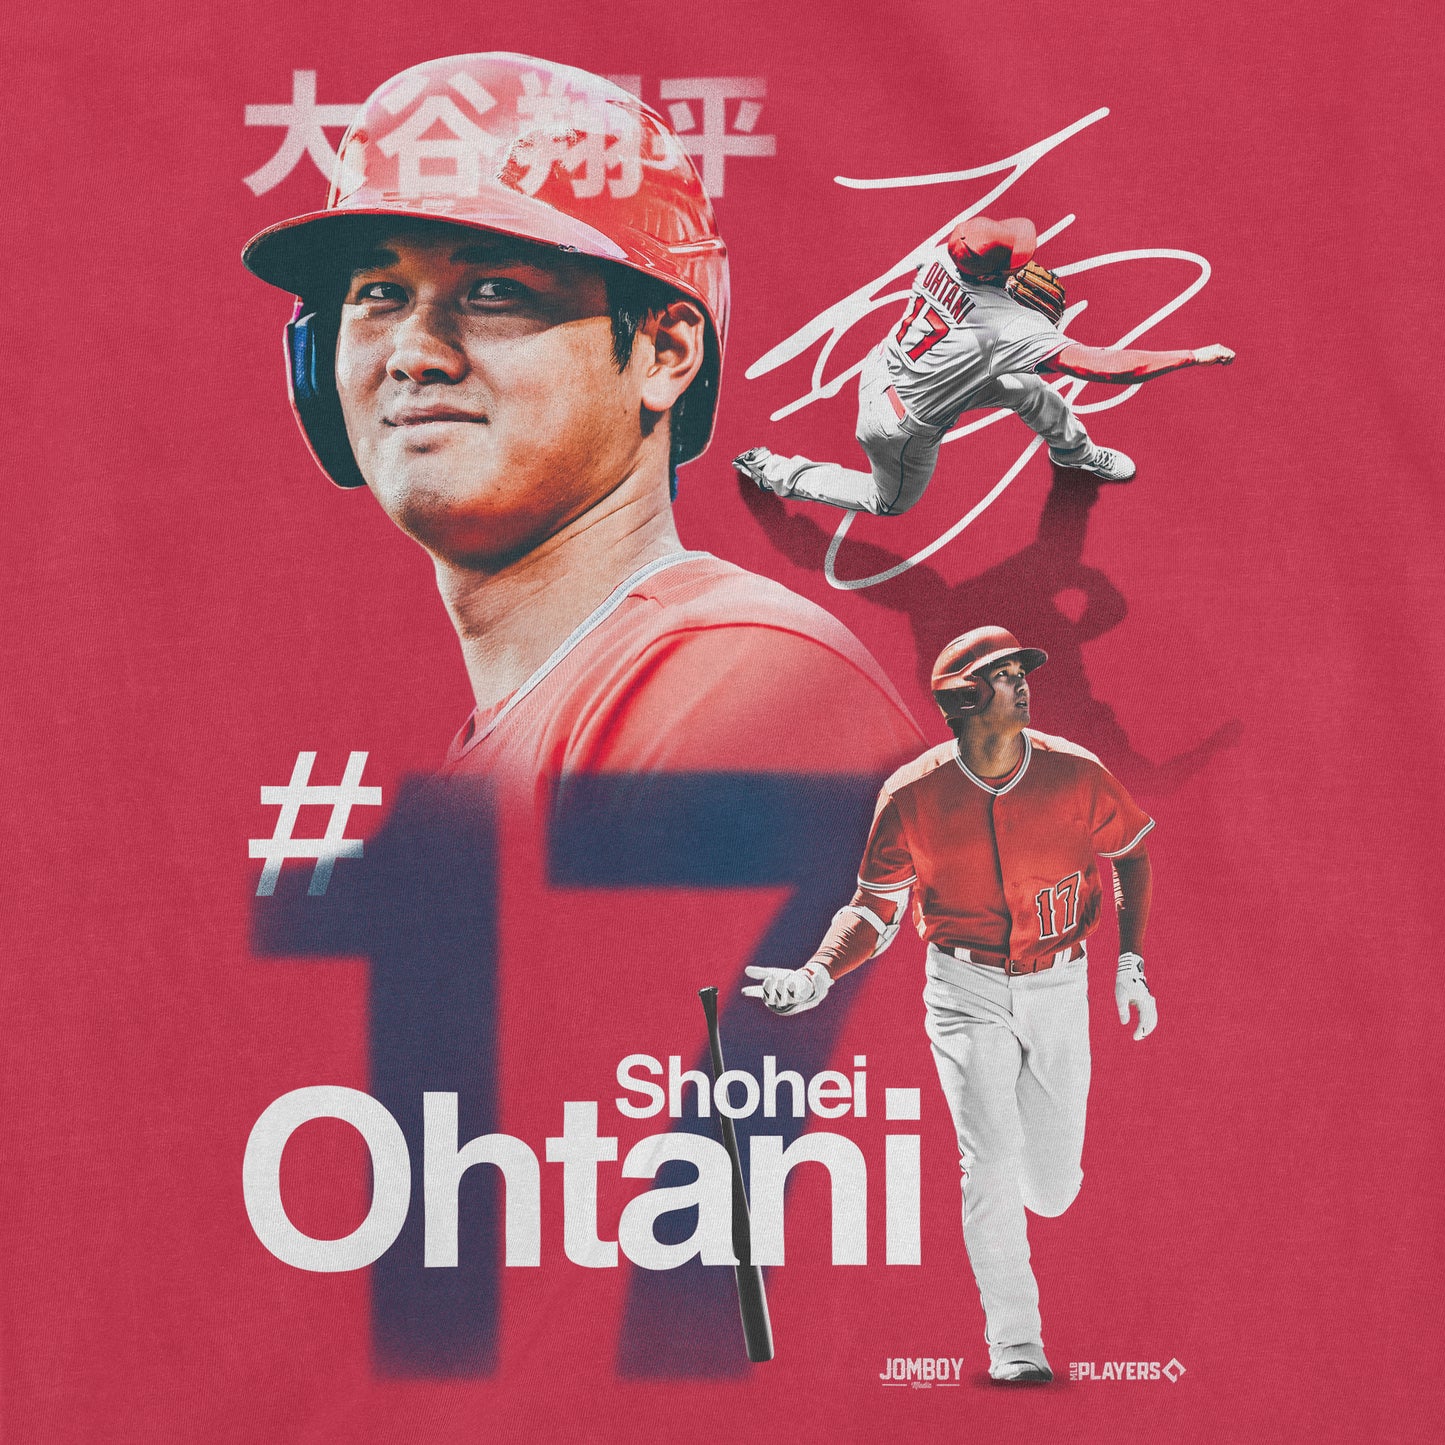 Shohei Ohtani | All-Star Game | Comfort Colors Vintage Tee S